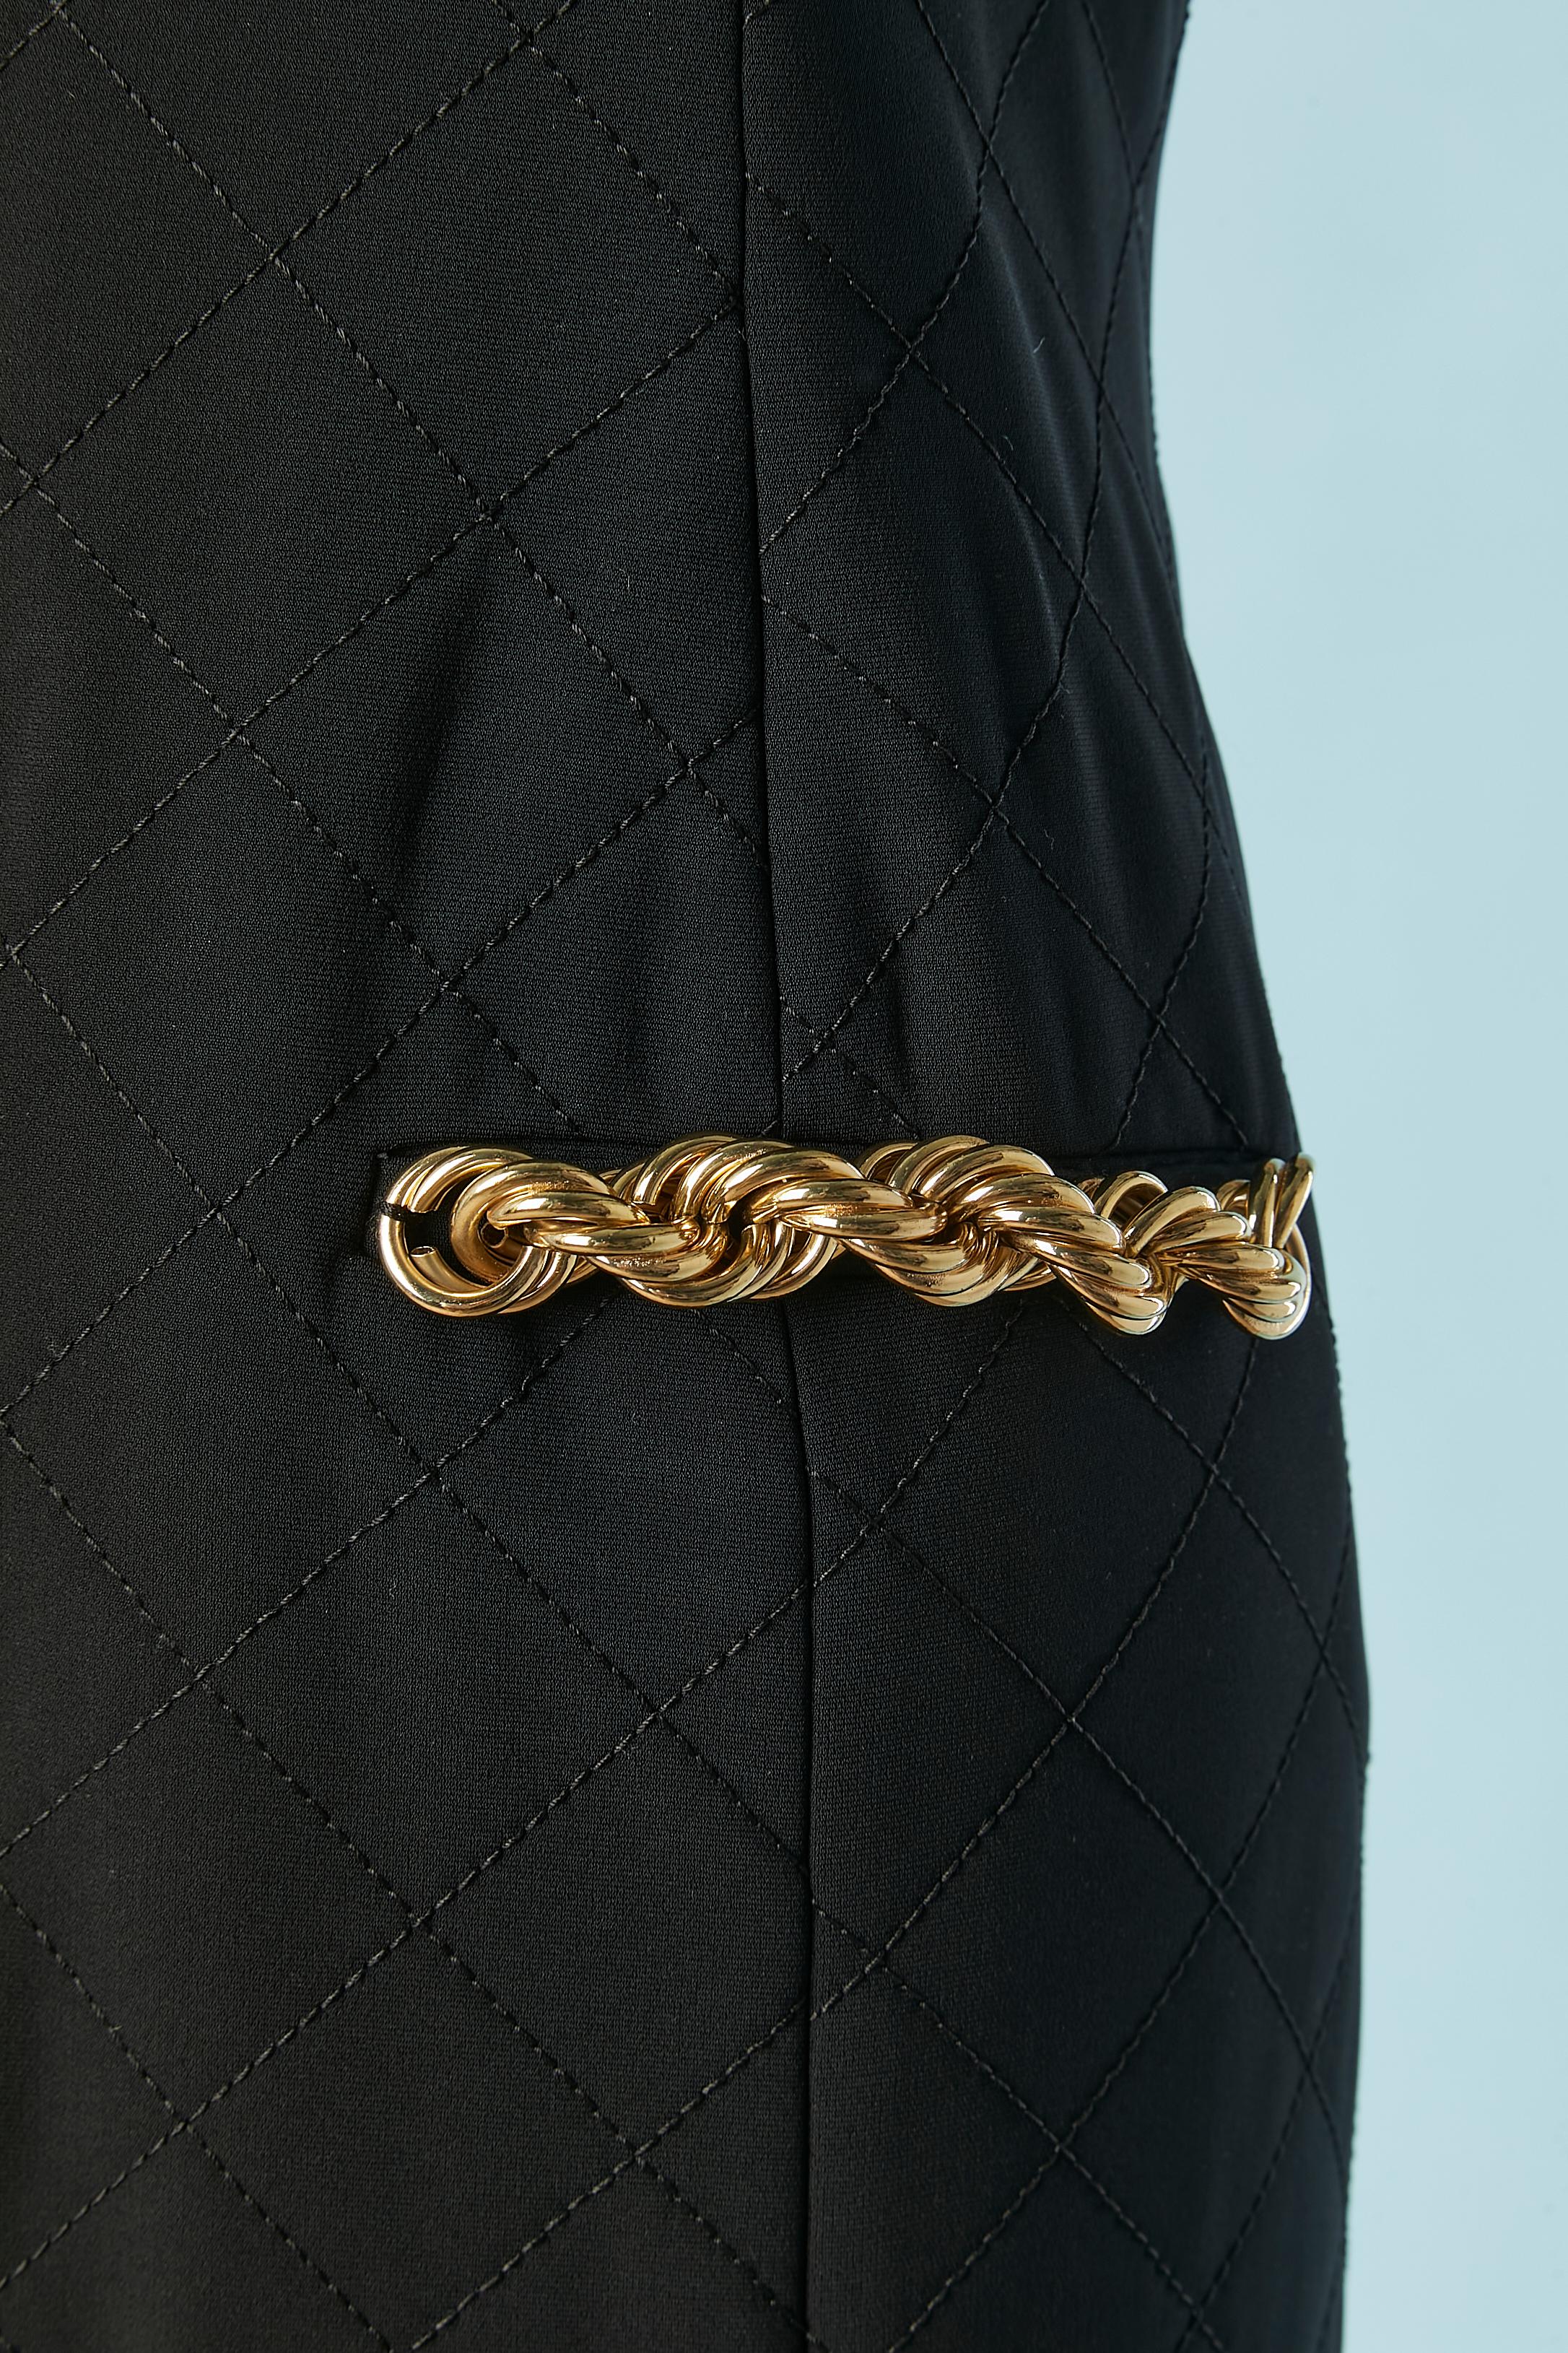 Noir Robe de cocktail noire cousue avec bordure en chaîne métallique dorée Moschino Couture  en vente